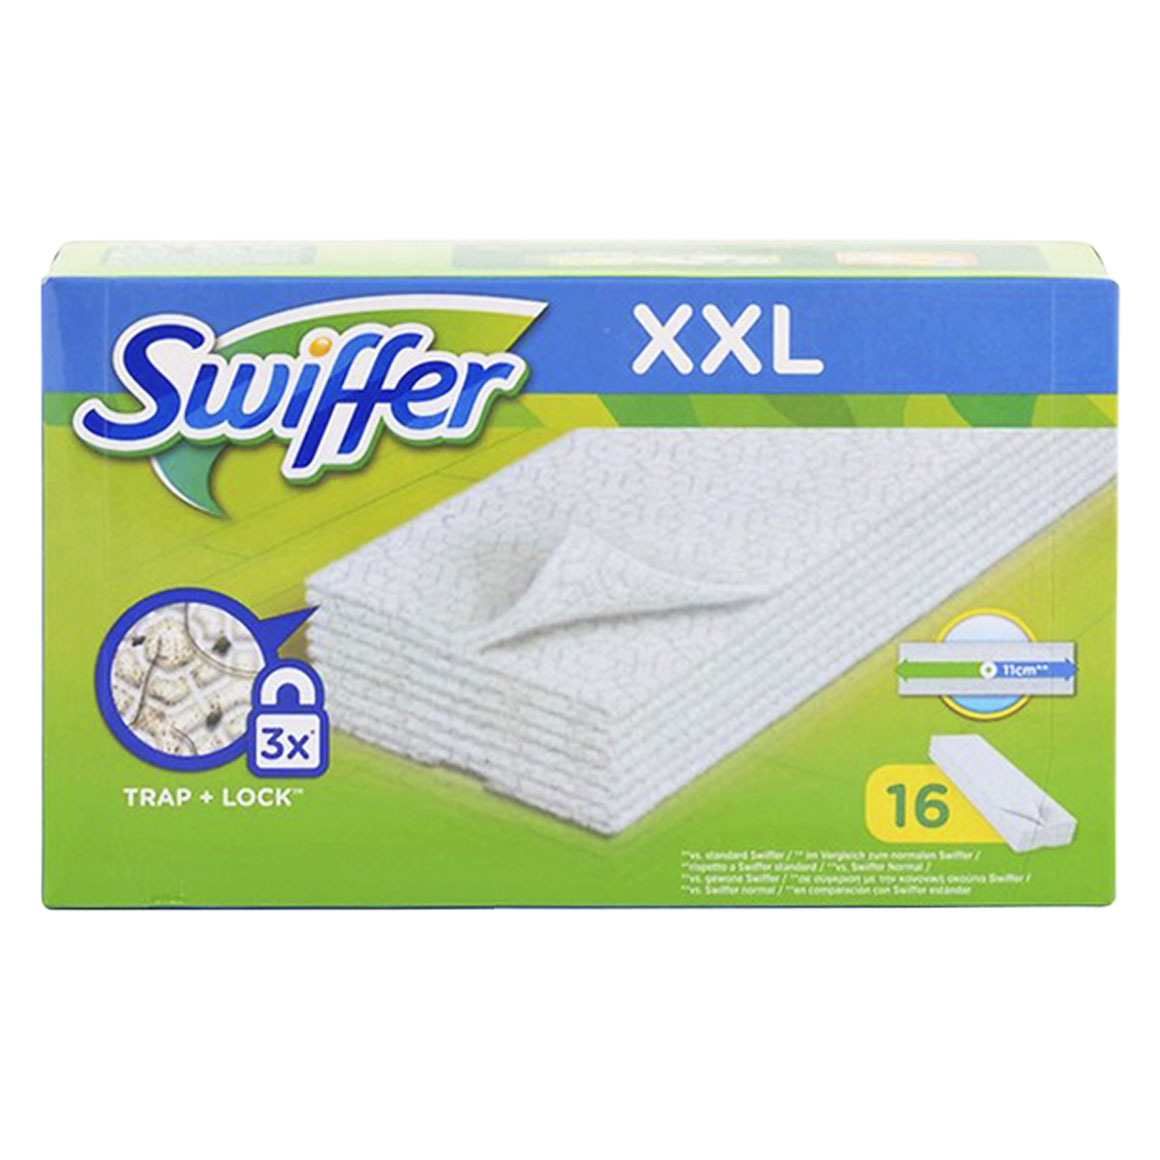 Swiffer Sweeper XXL vloerdoekjes navulling (16 stuks)